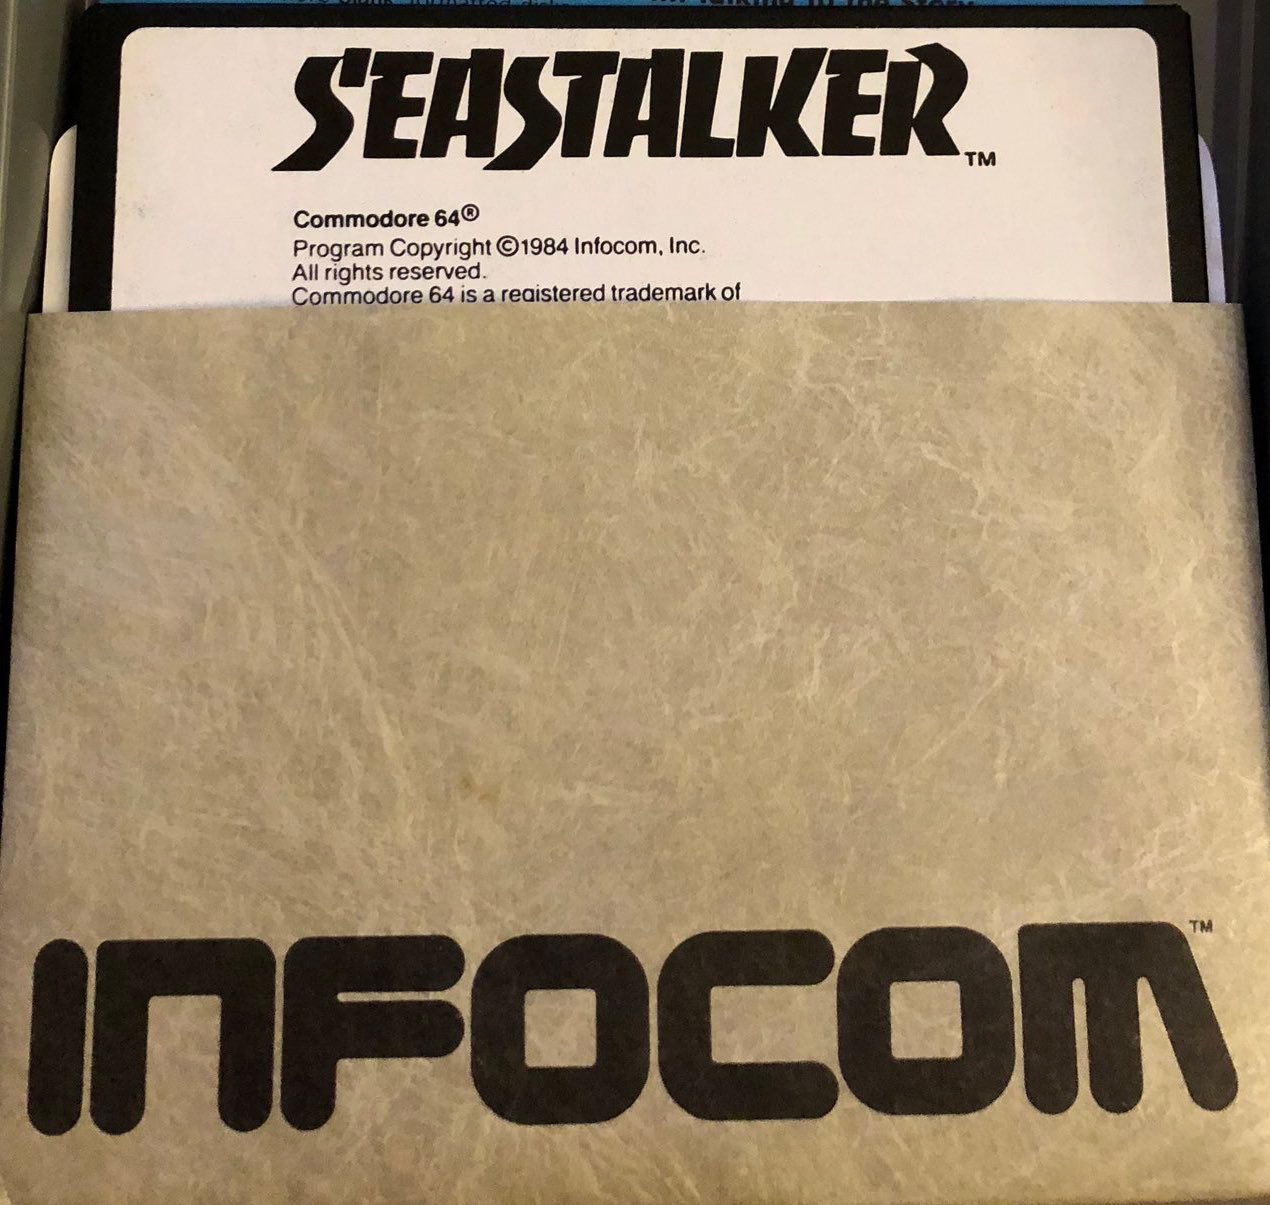 Seastalker - Commodore 64